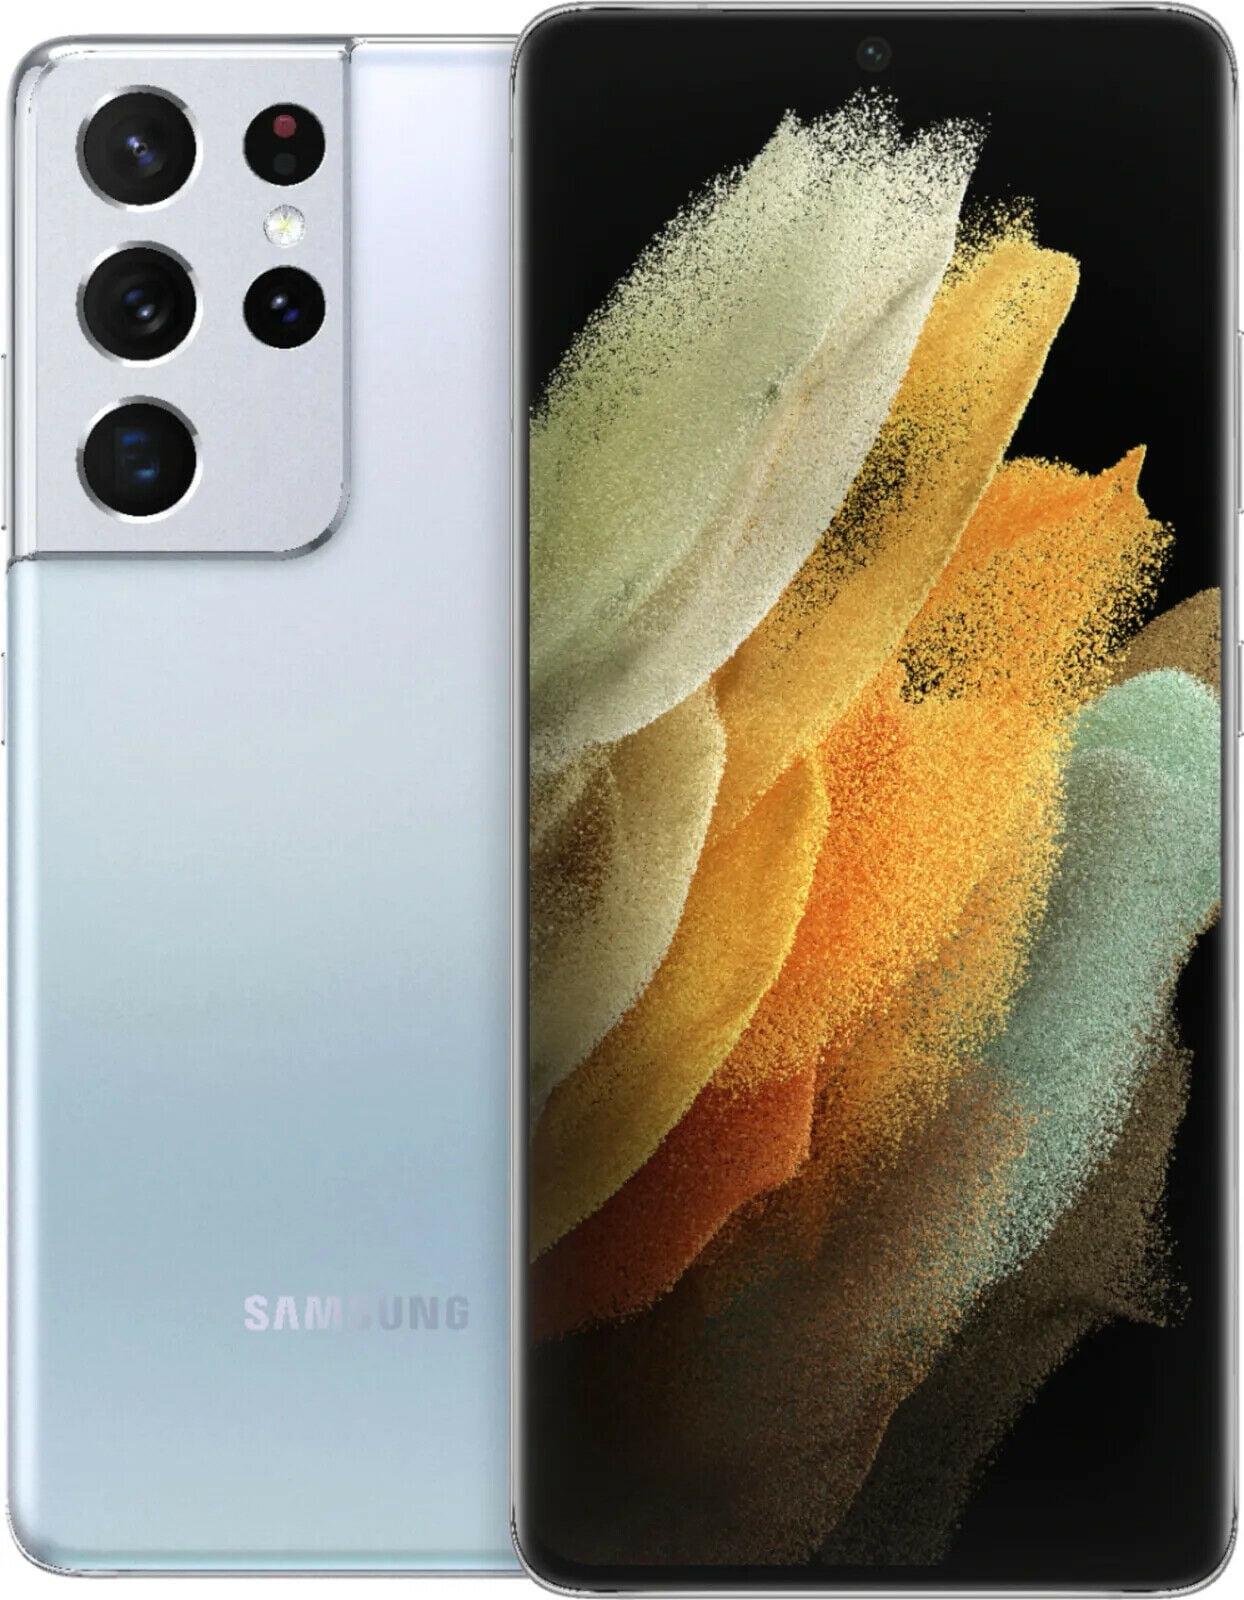 New Samsung Galaxy S21 Ultra 512GB - Mobile Phones - 120089499